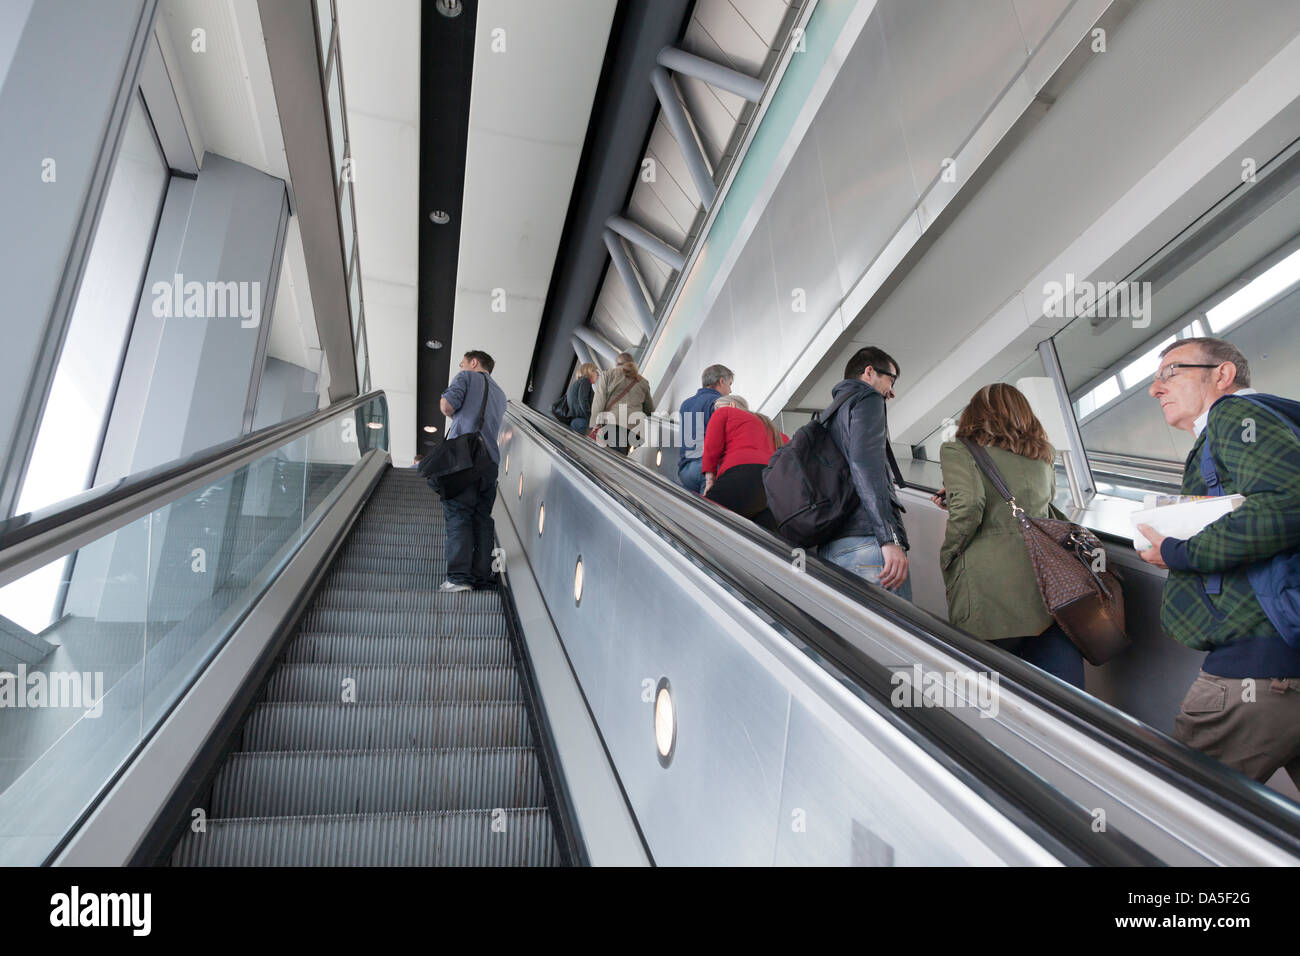 Les passagers de l'aéroport jusqu'à l'escalator Banque D'Images